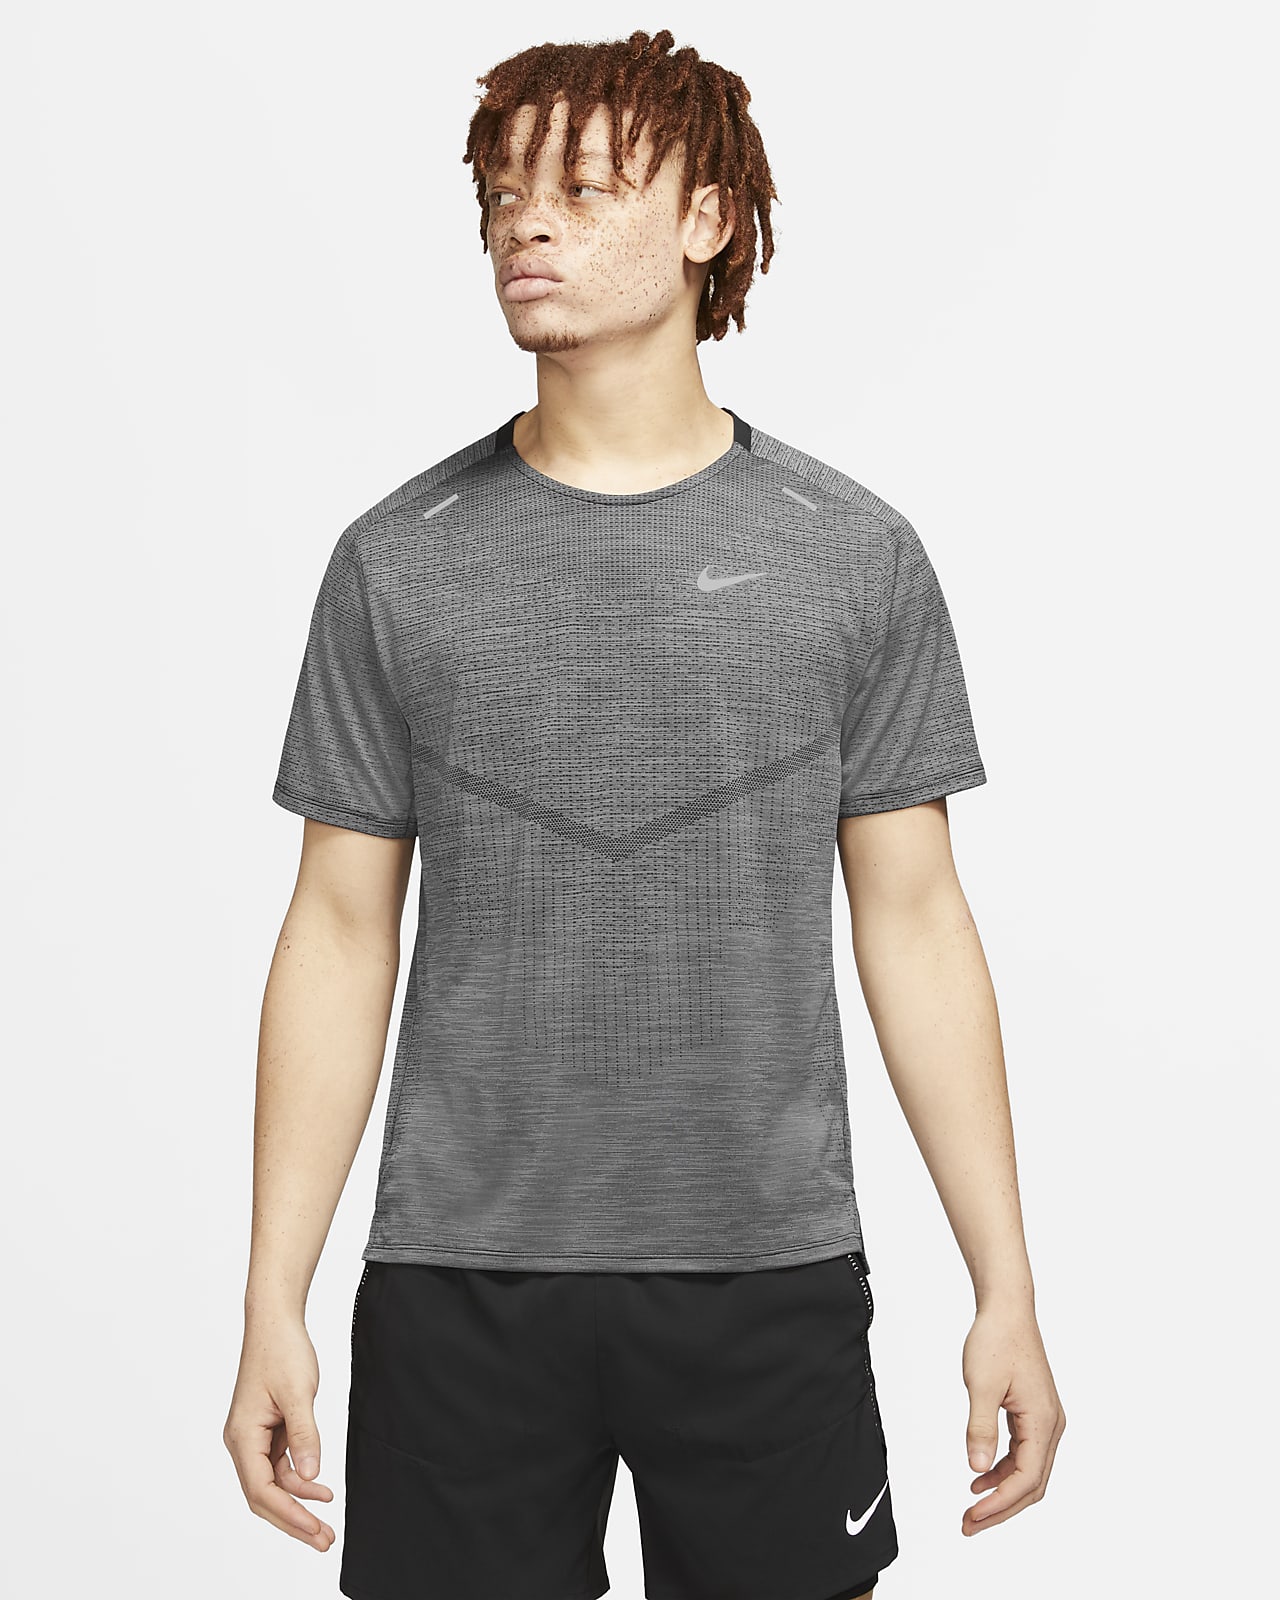 Nike Dri-FIT ADV Techknit Ultra Men's Short-Sleeve Running Top